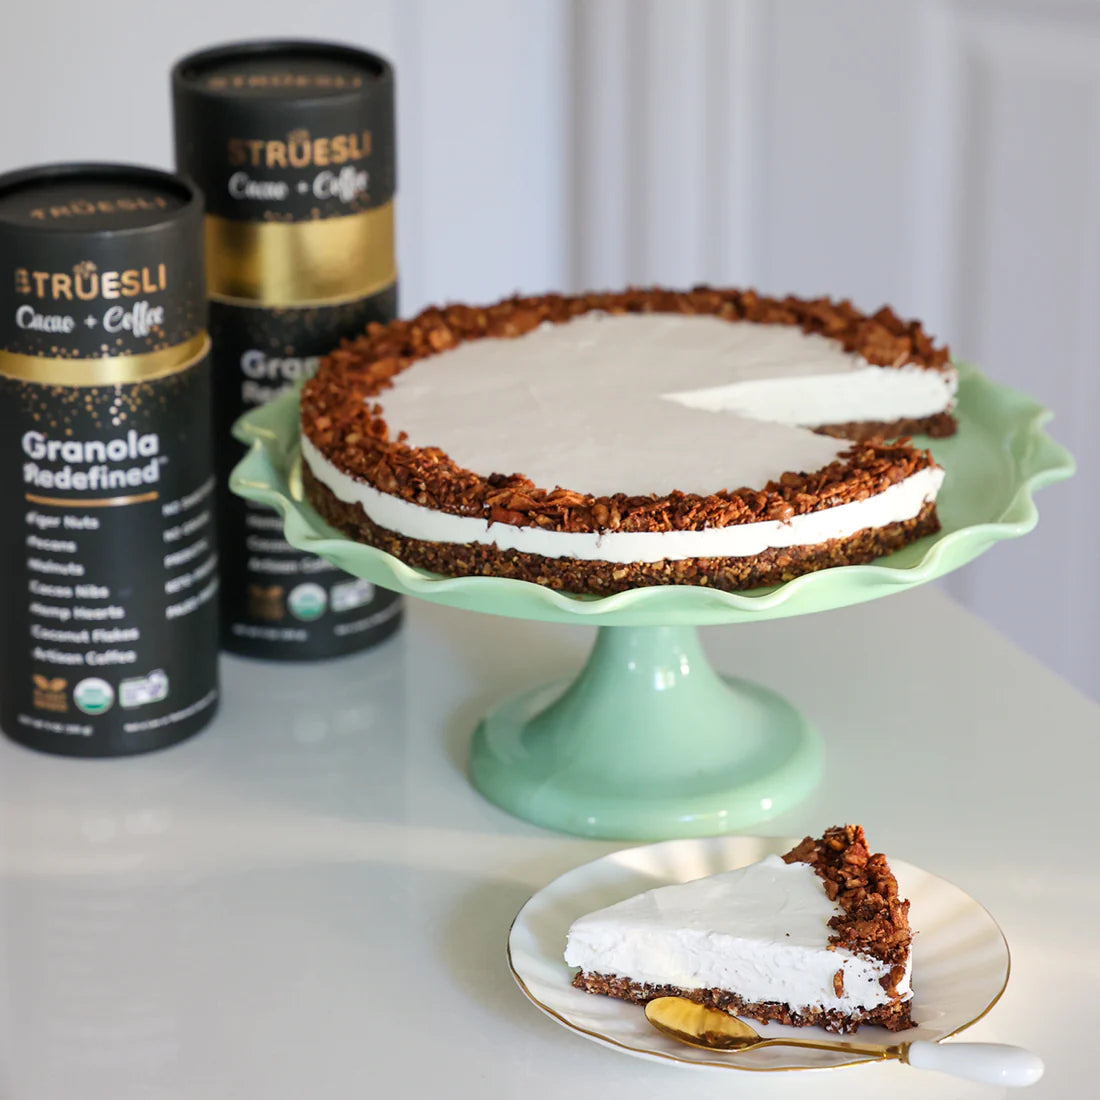 A vegan cheesecake coated with Struesli's rich cacao + coffee granola.